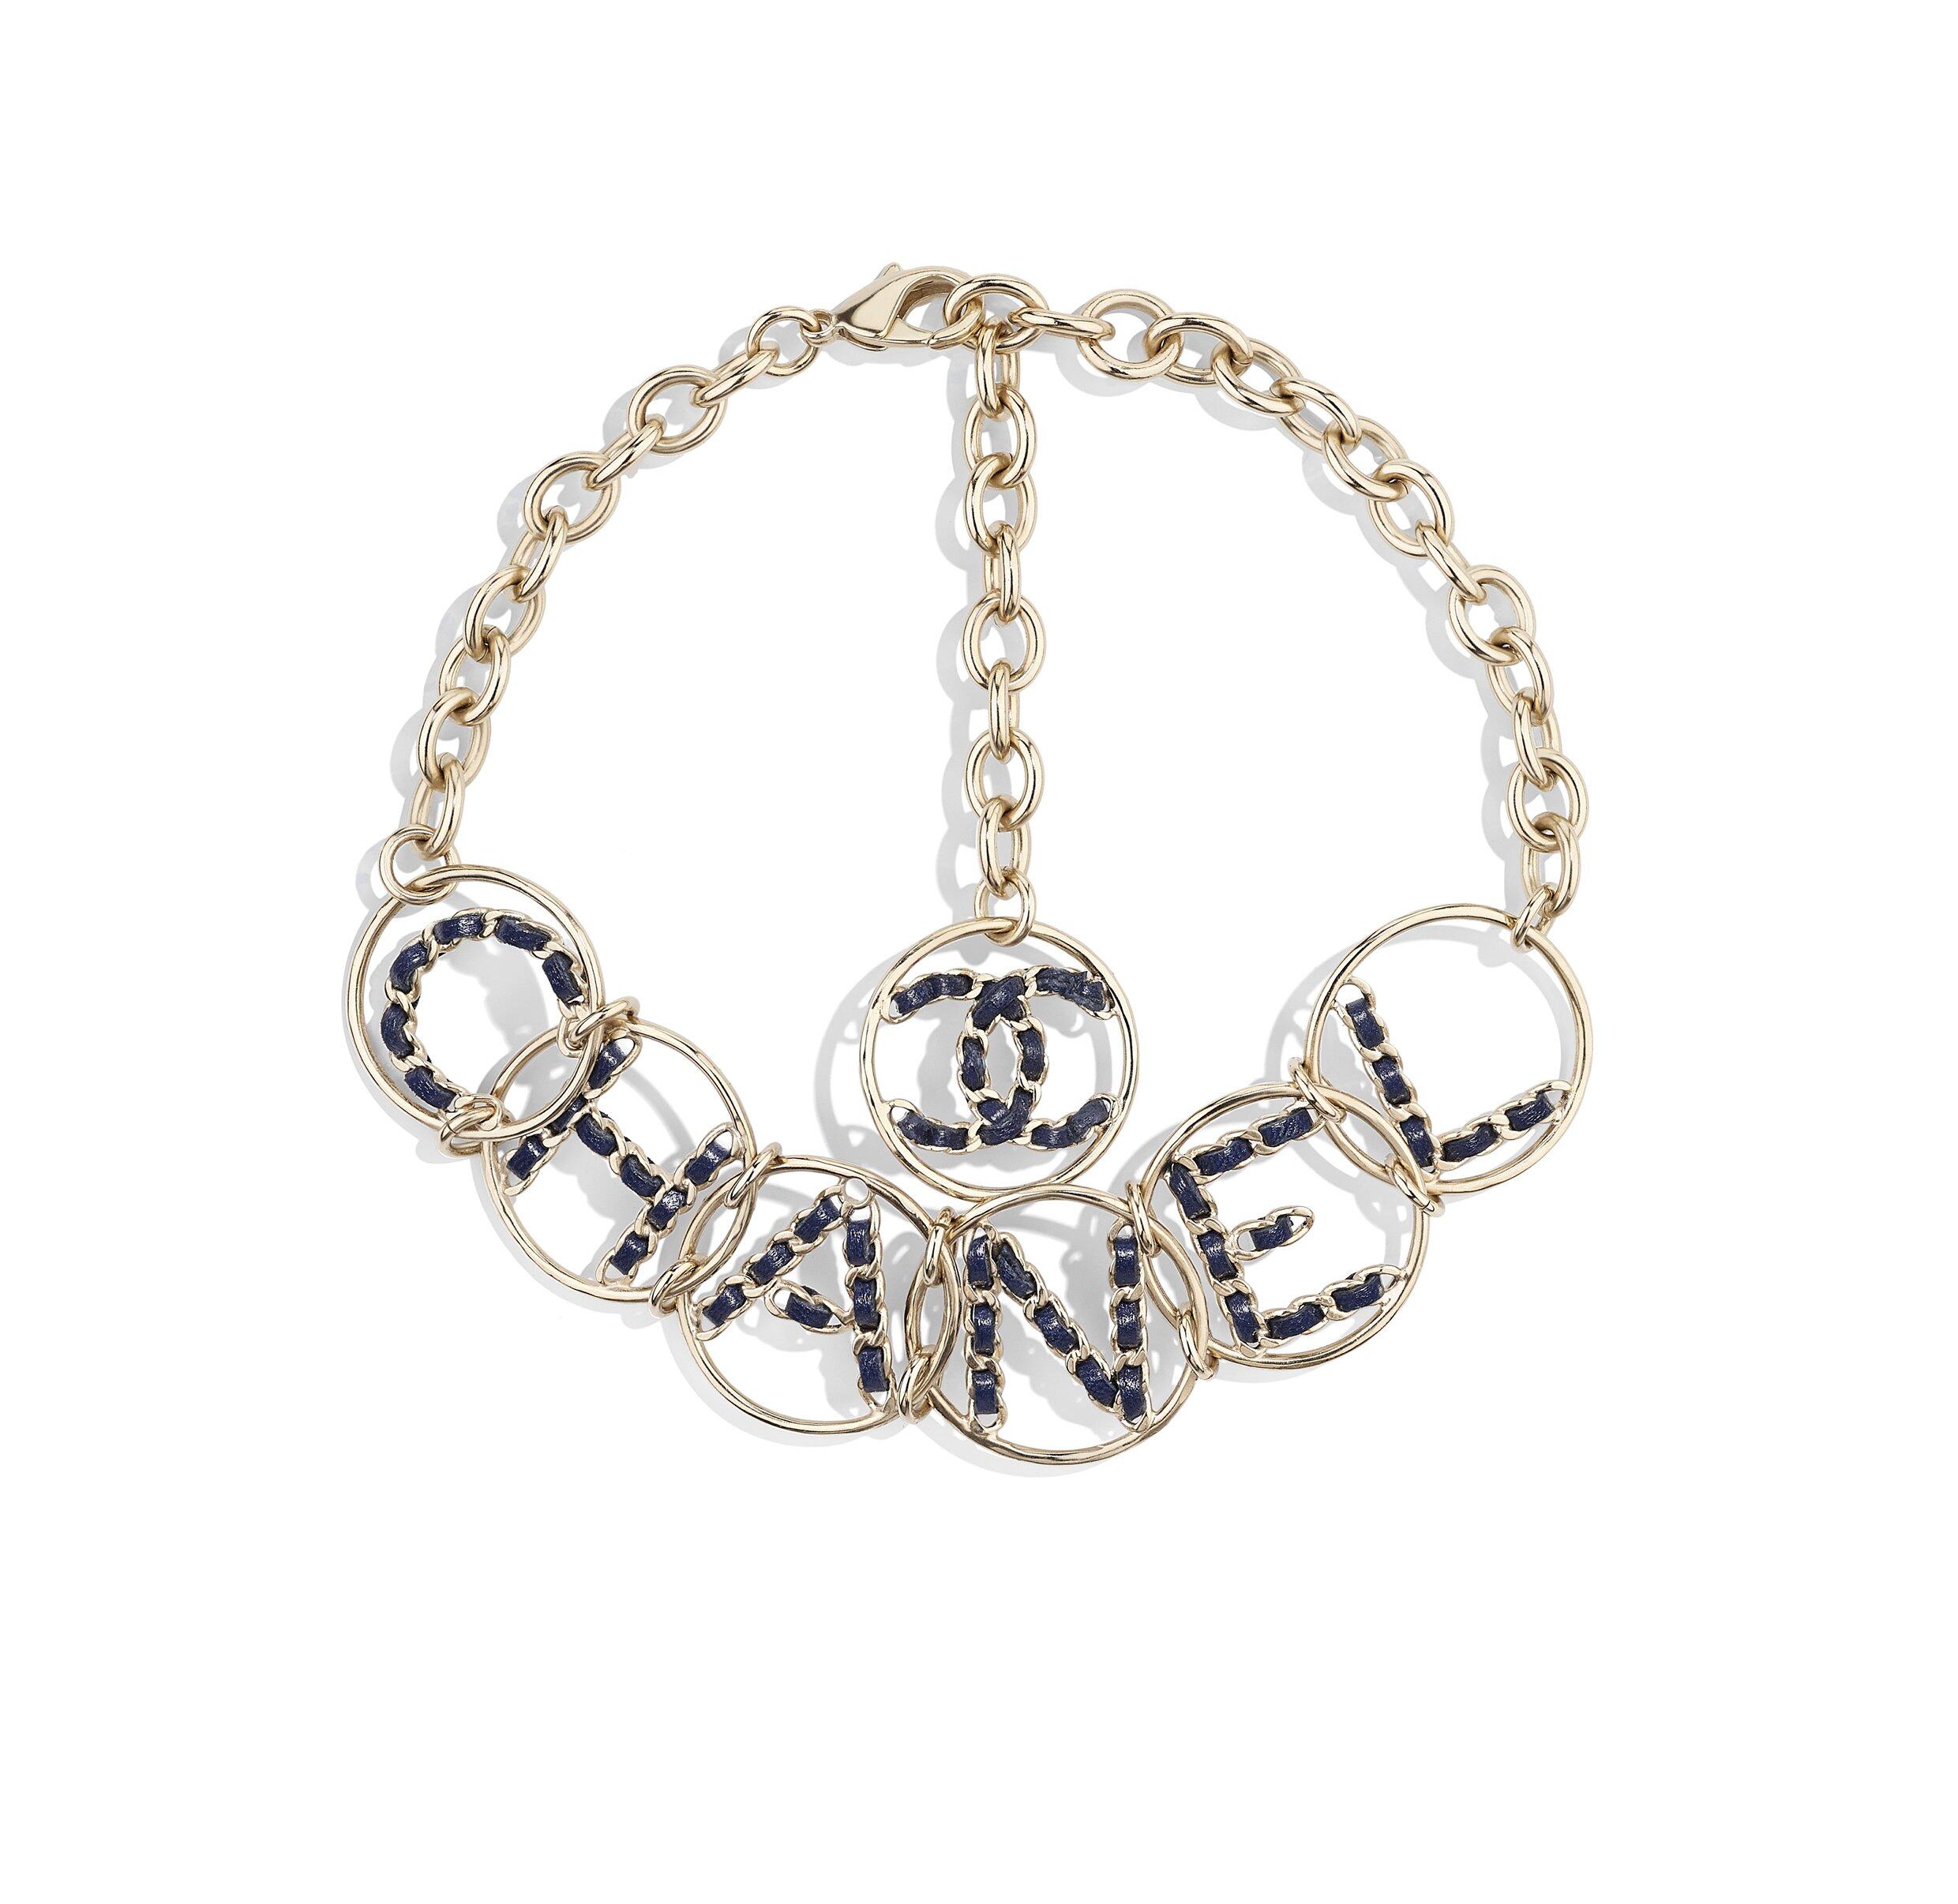 Chanel Logo 融入首飾設計中，顯得別具時尚感。